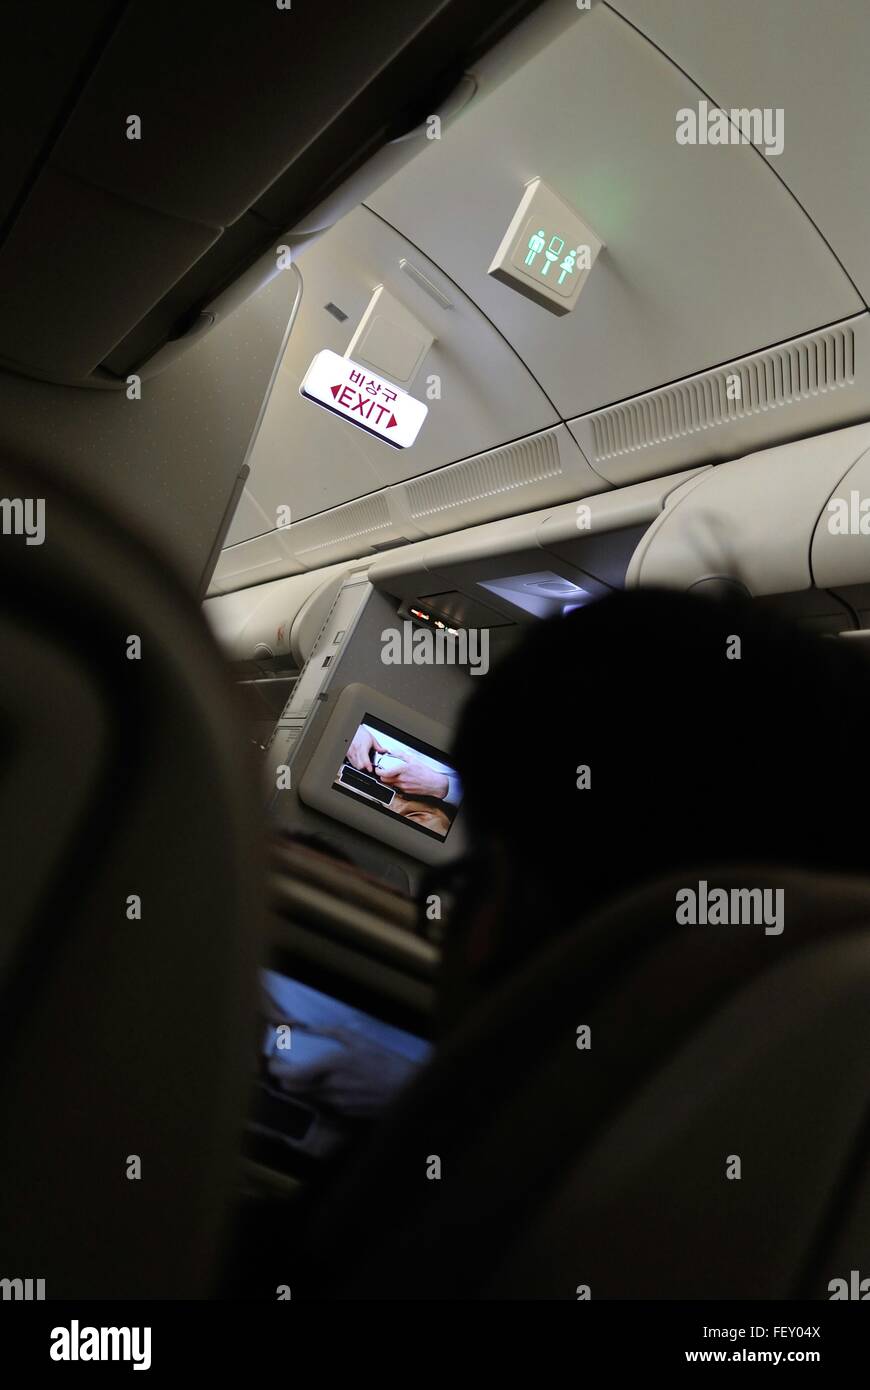 View Of Luxury Vehicle Interior Stock Photo